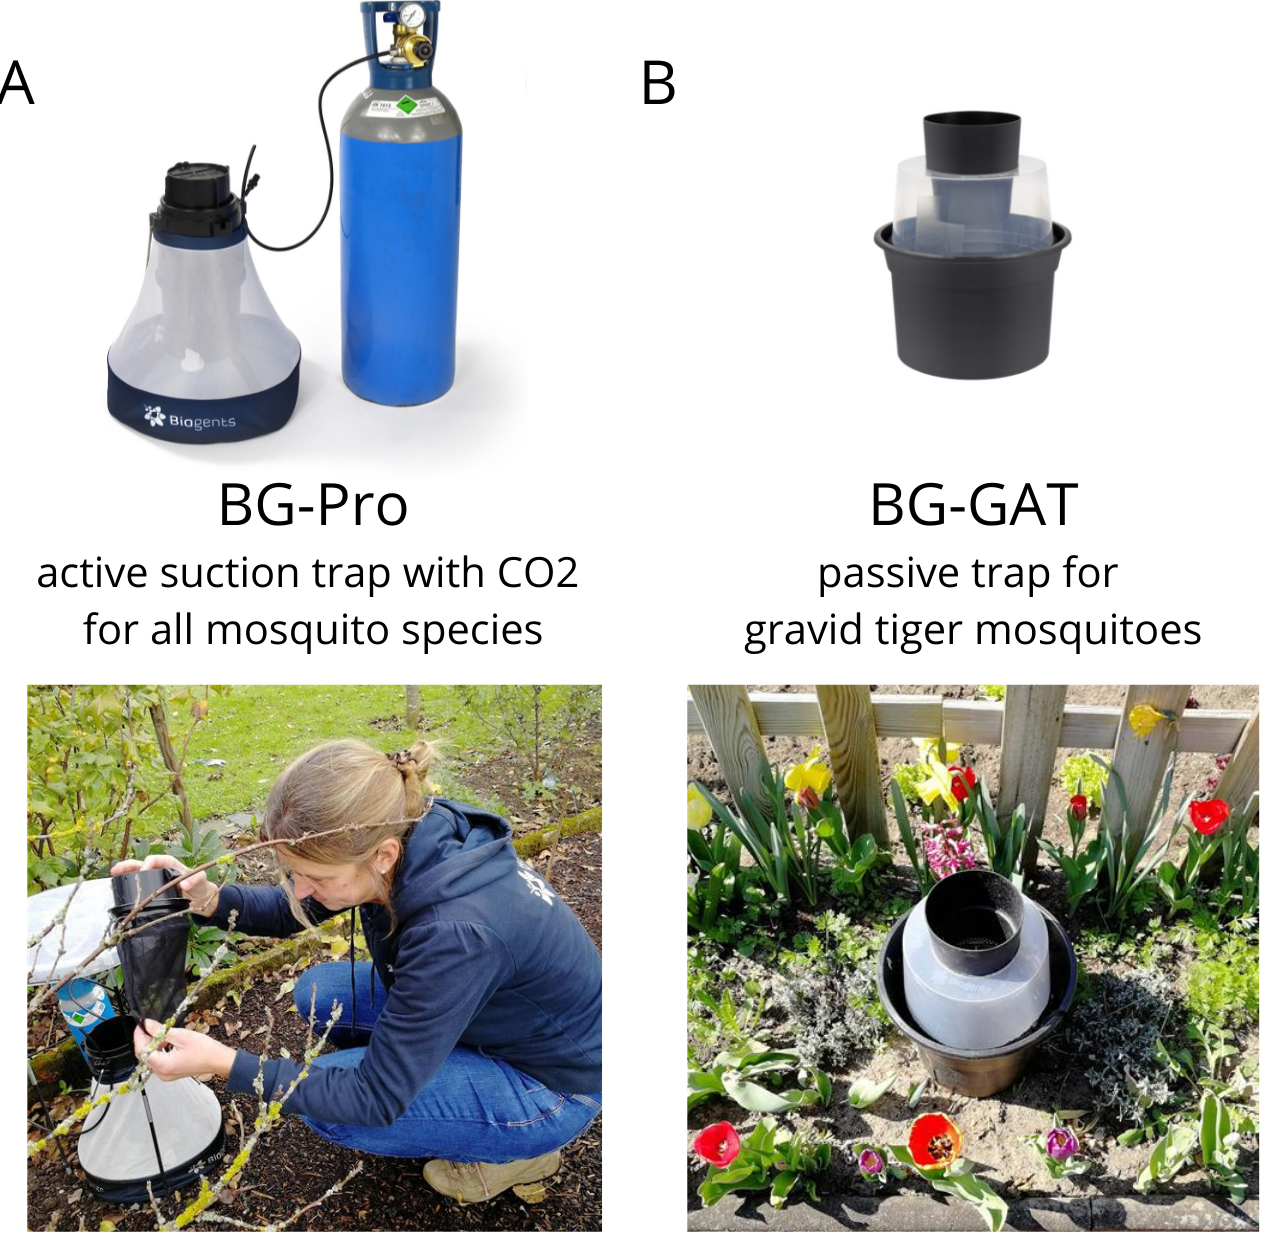 Biogents tiger mosquito traps BG-Pro and BG-GAT